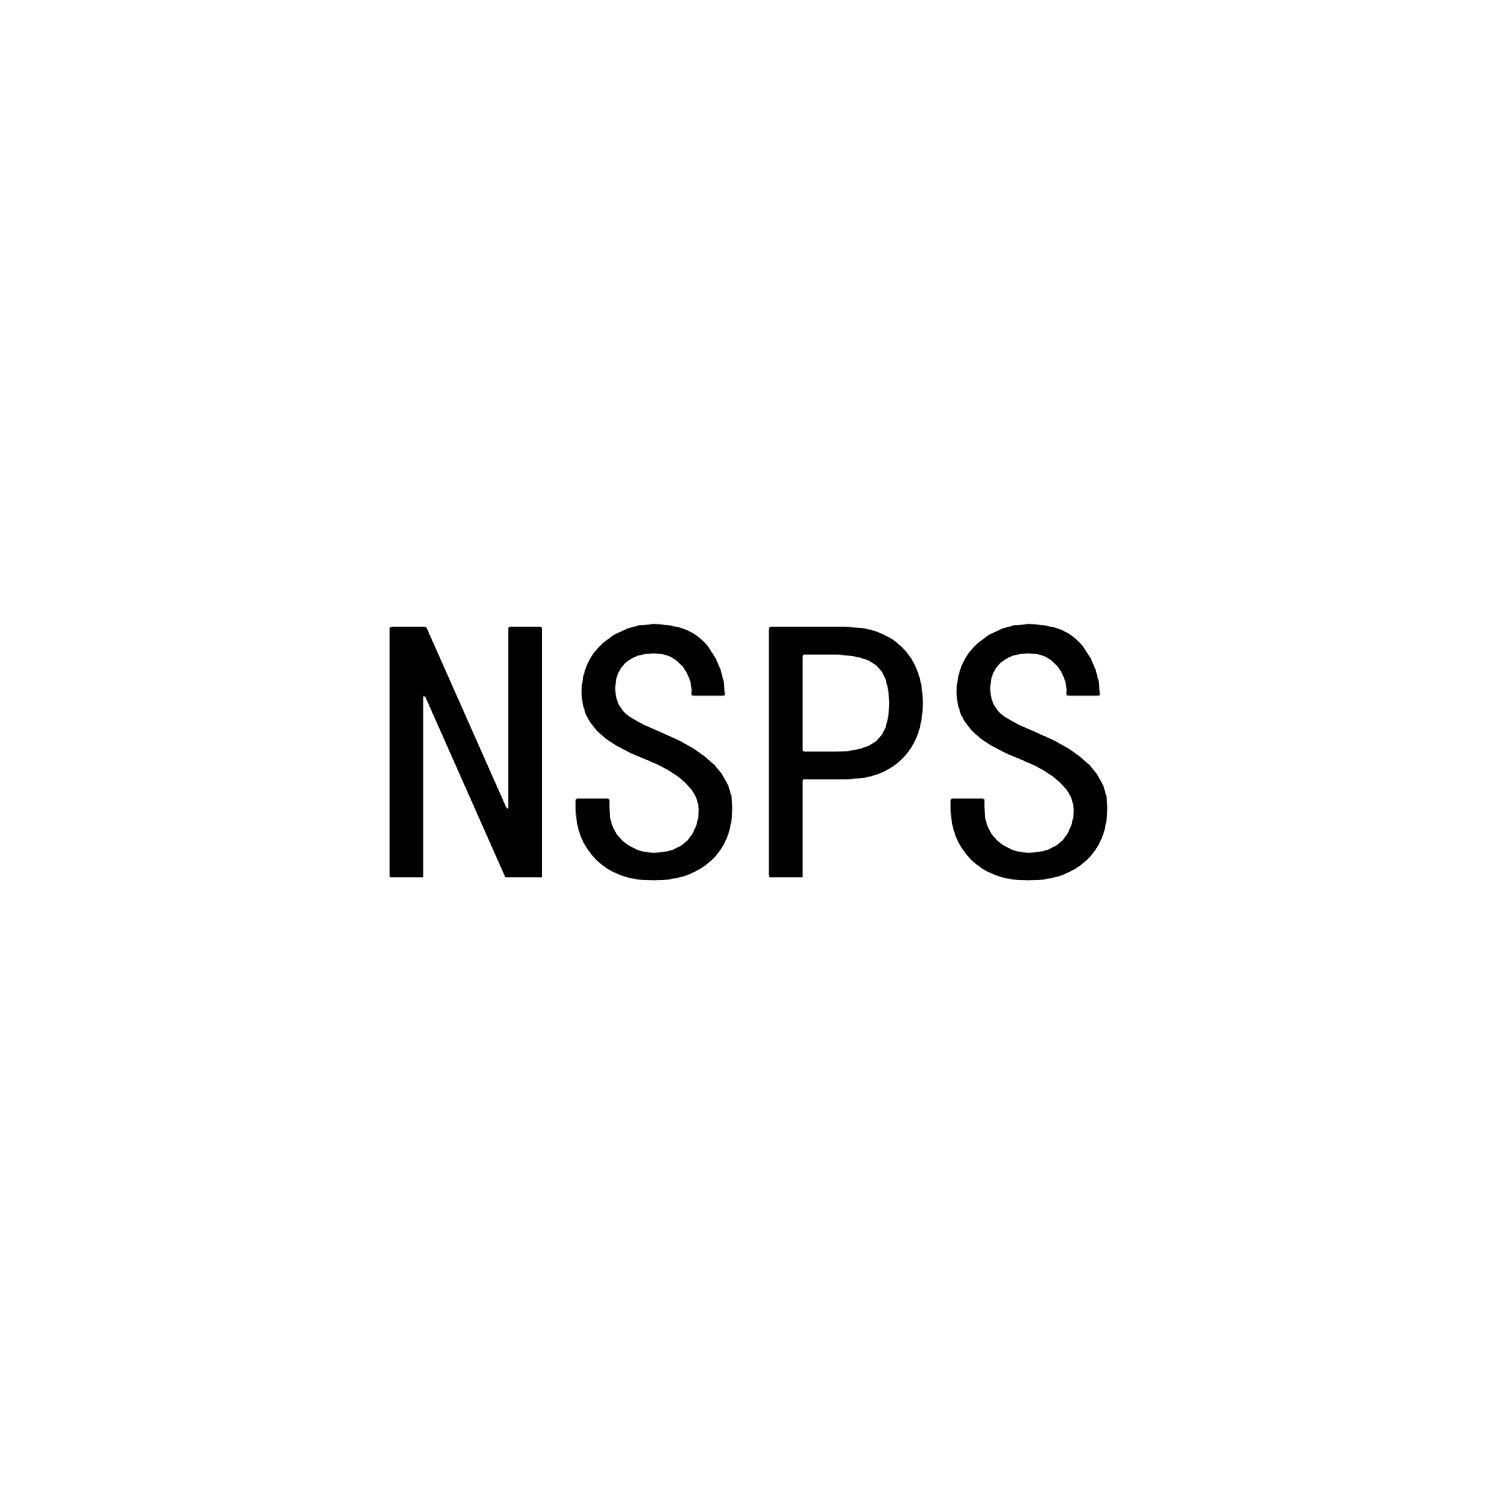 NSPS